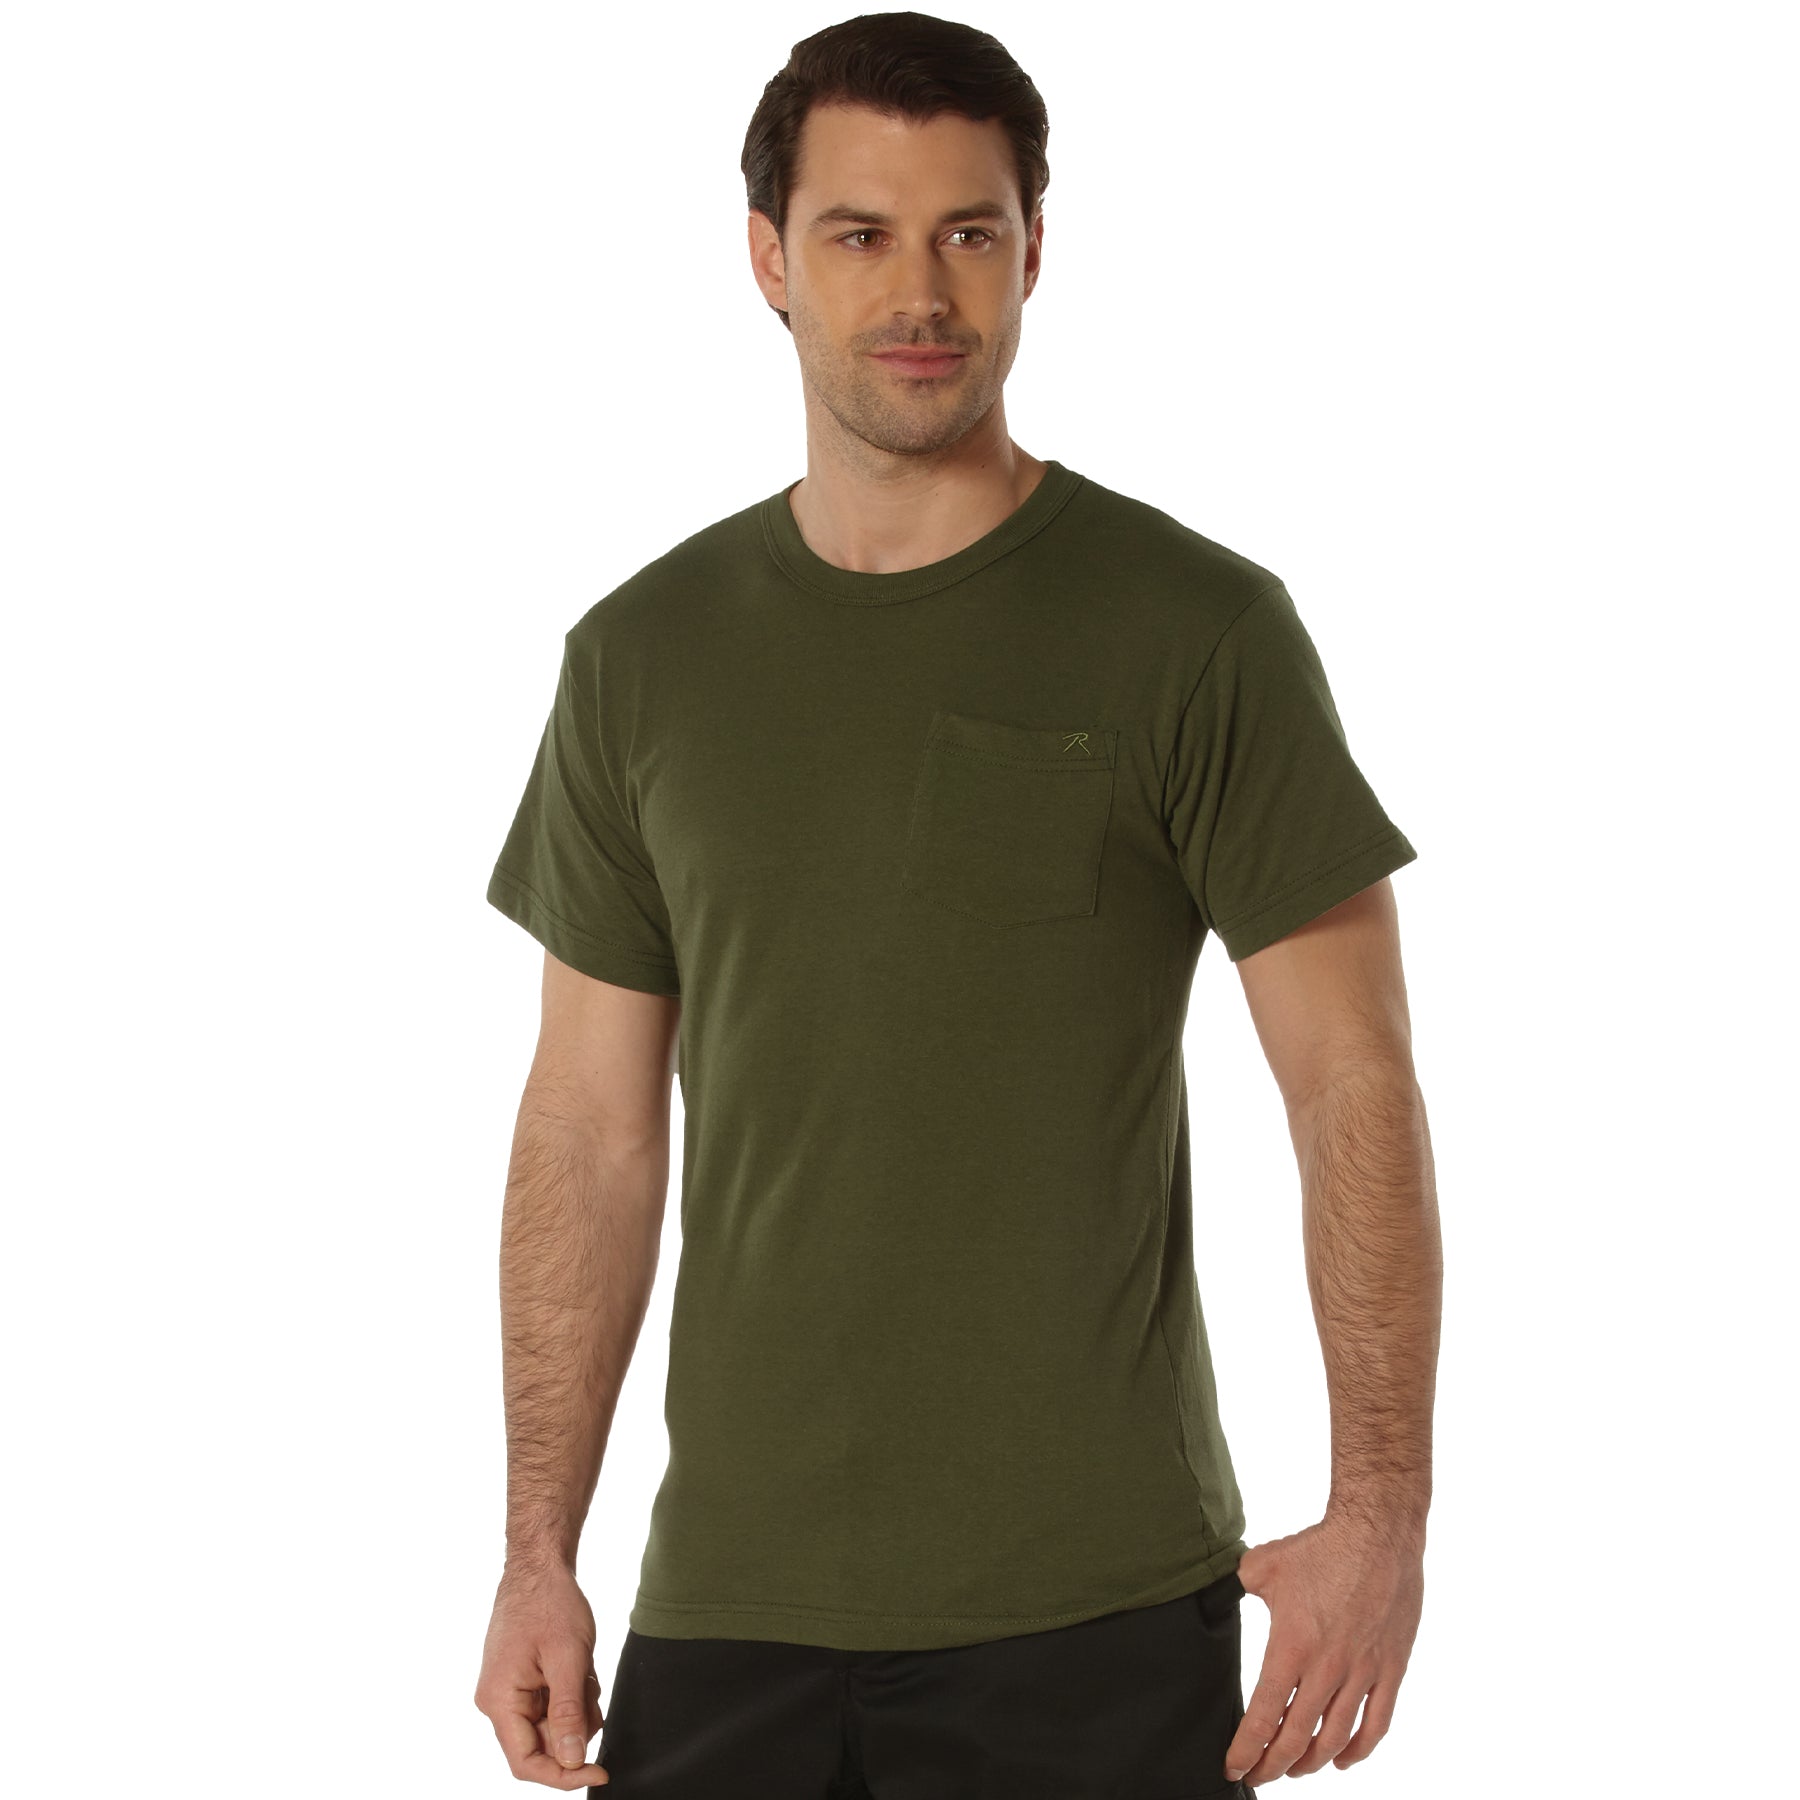 [AR 670-1] Poly/Cotton Pocket T-Shirts Olive Drab